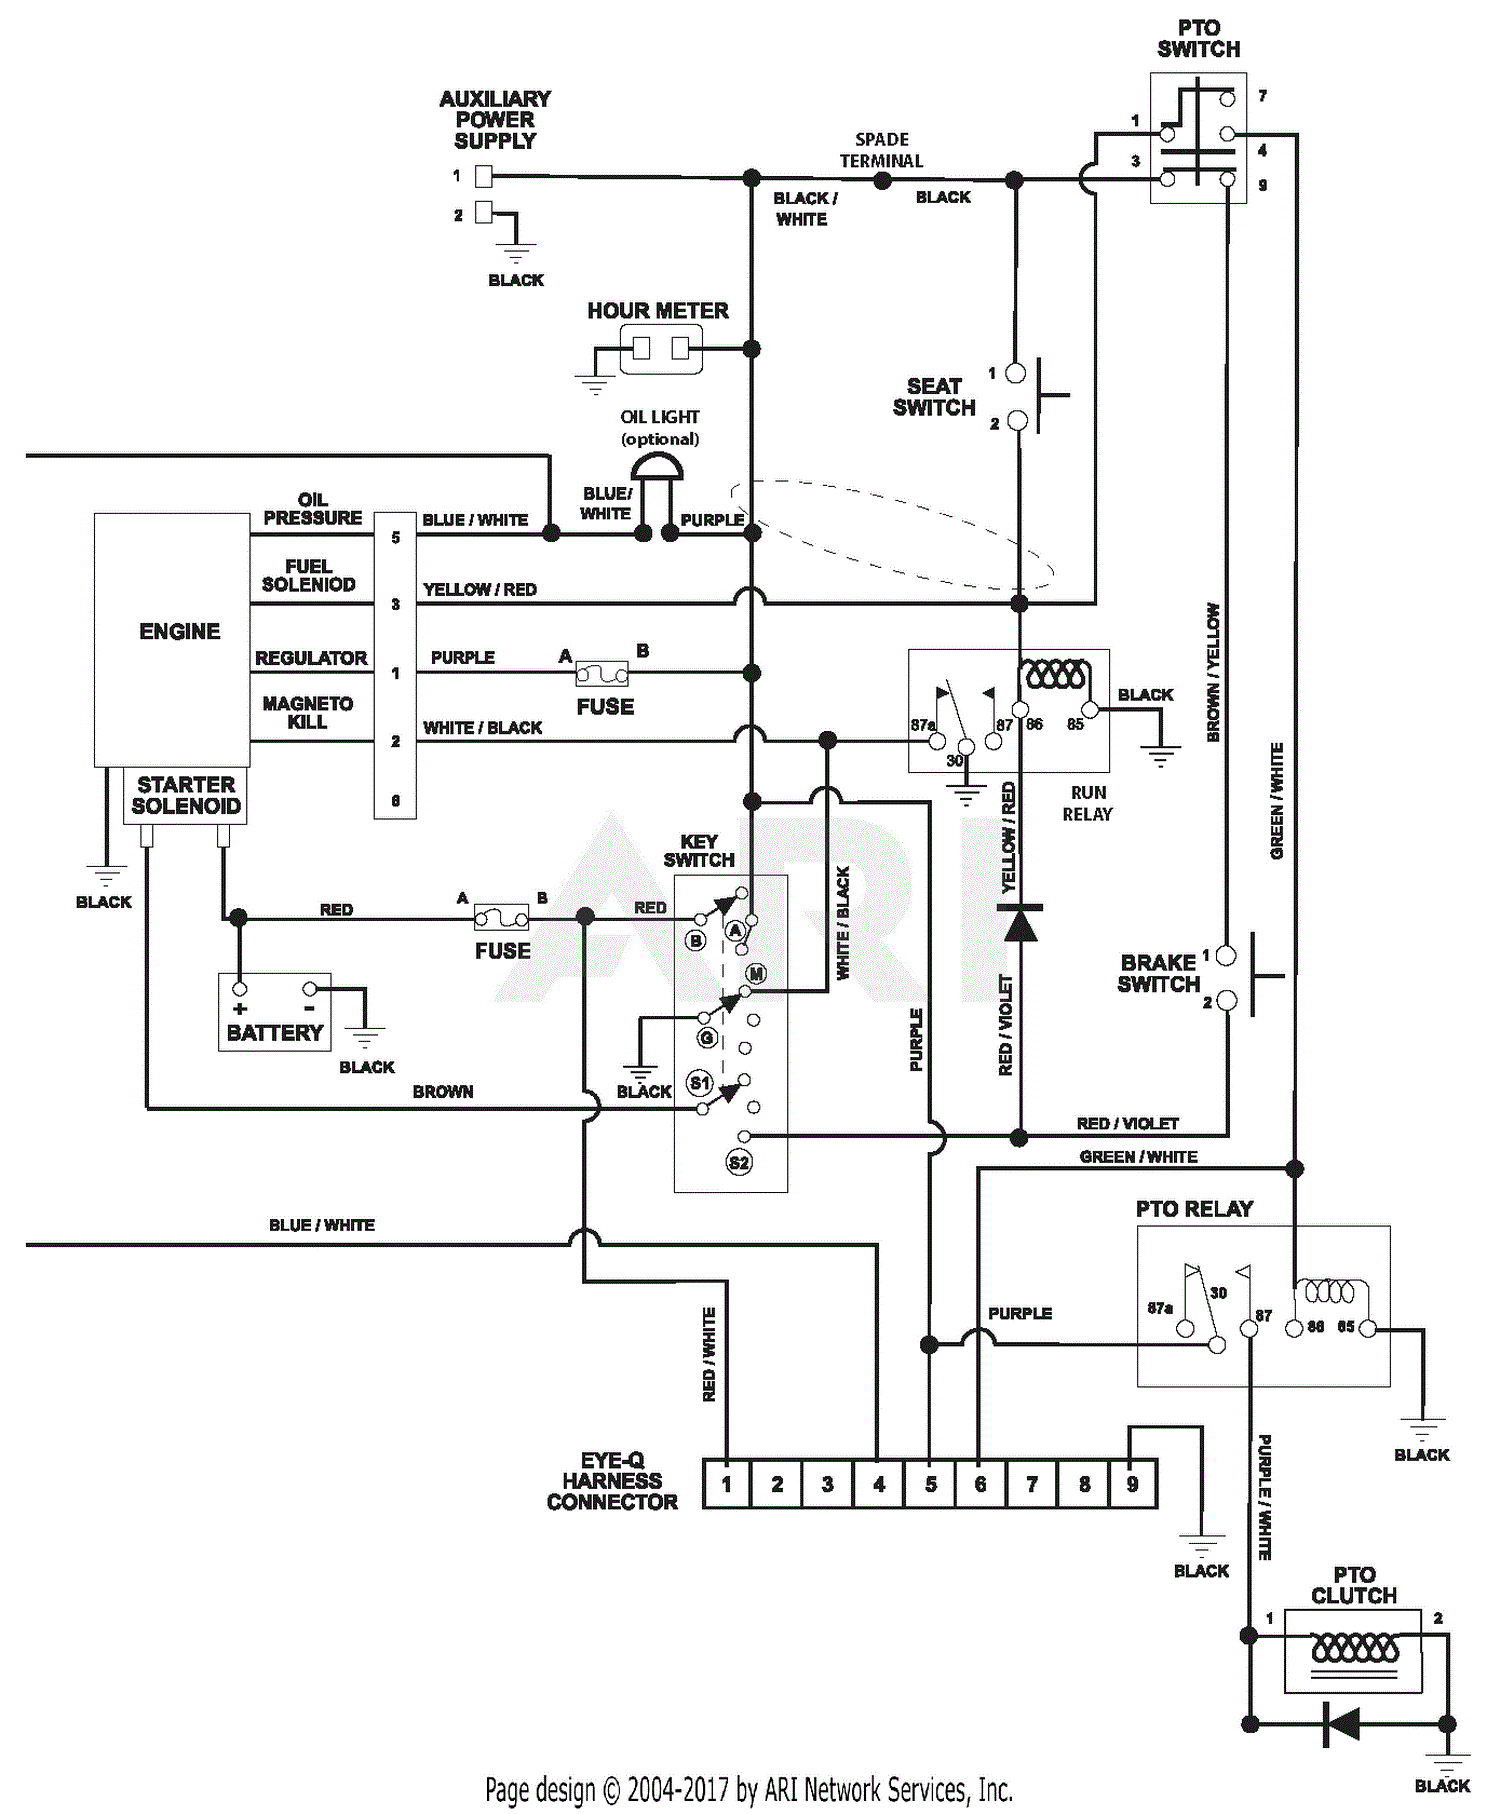 Exmark Lazer Z 26 Hp Wiring Diagram lazer moped wiring diagram 